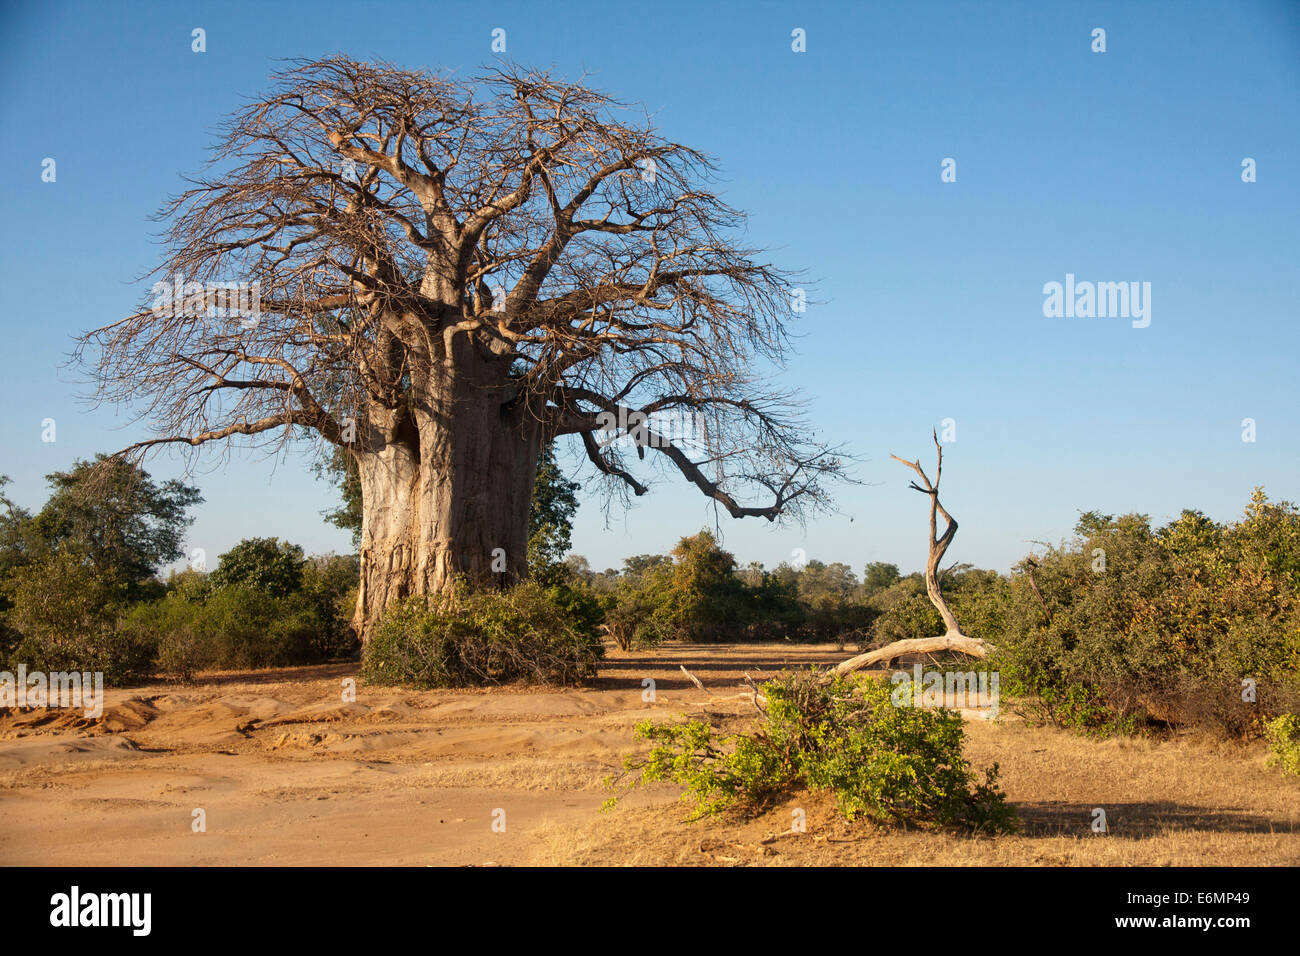 African Baobab (Adansonia digitata) in bushland, Lower Zambezi, Zambia Stock Photo